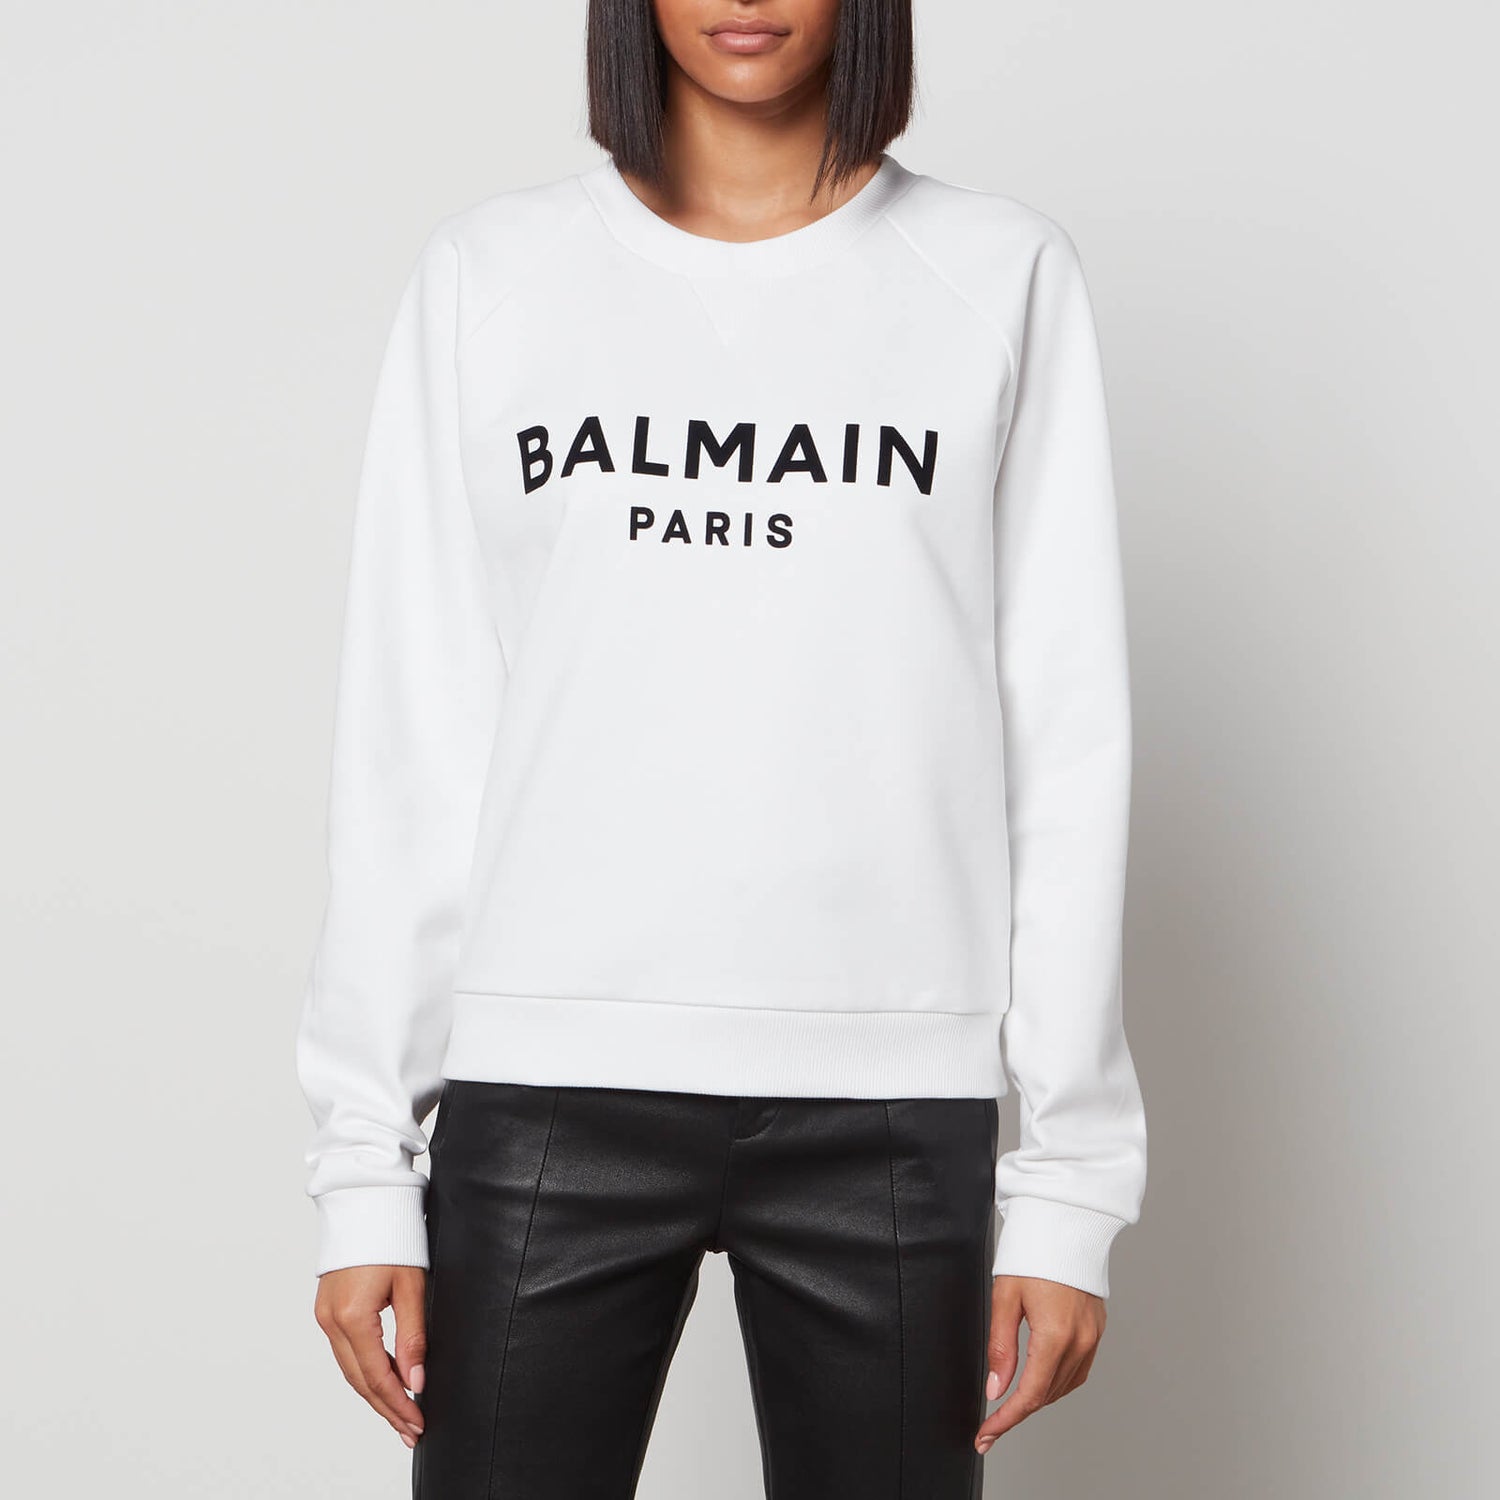 Balmain Women's Flocked Sweatshirt - White/Black - FR 34/UK 6